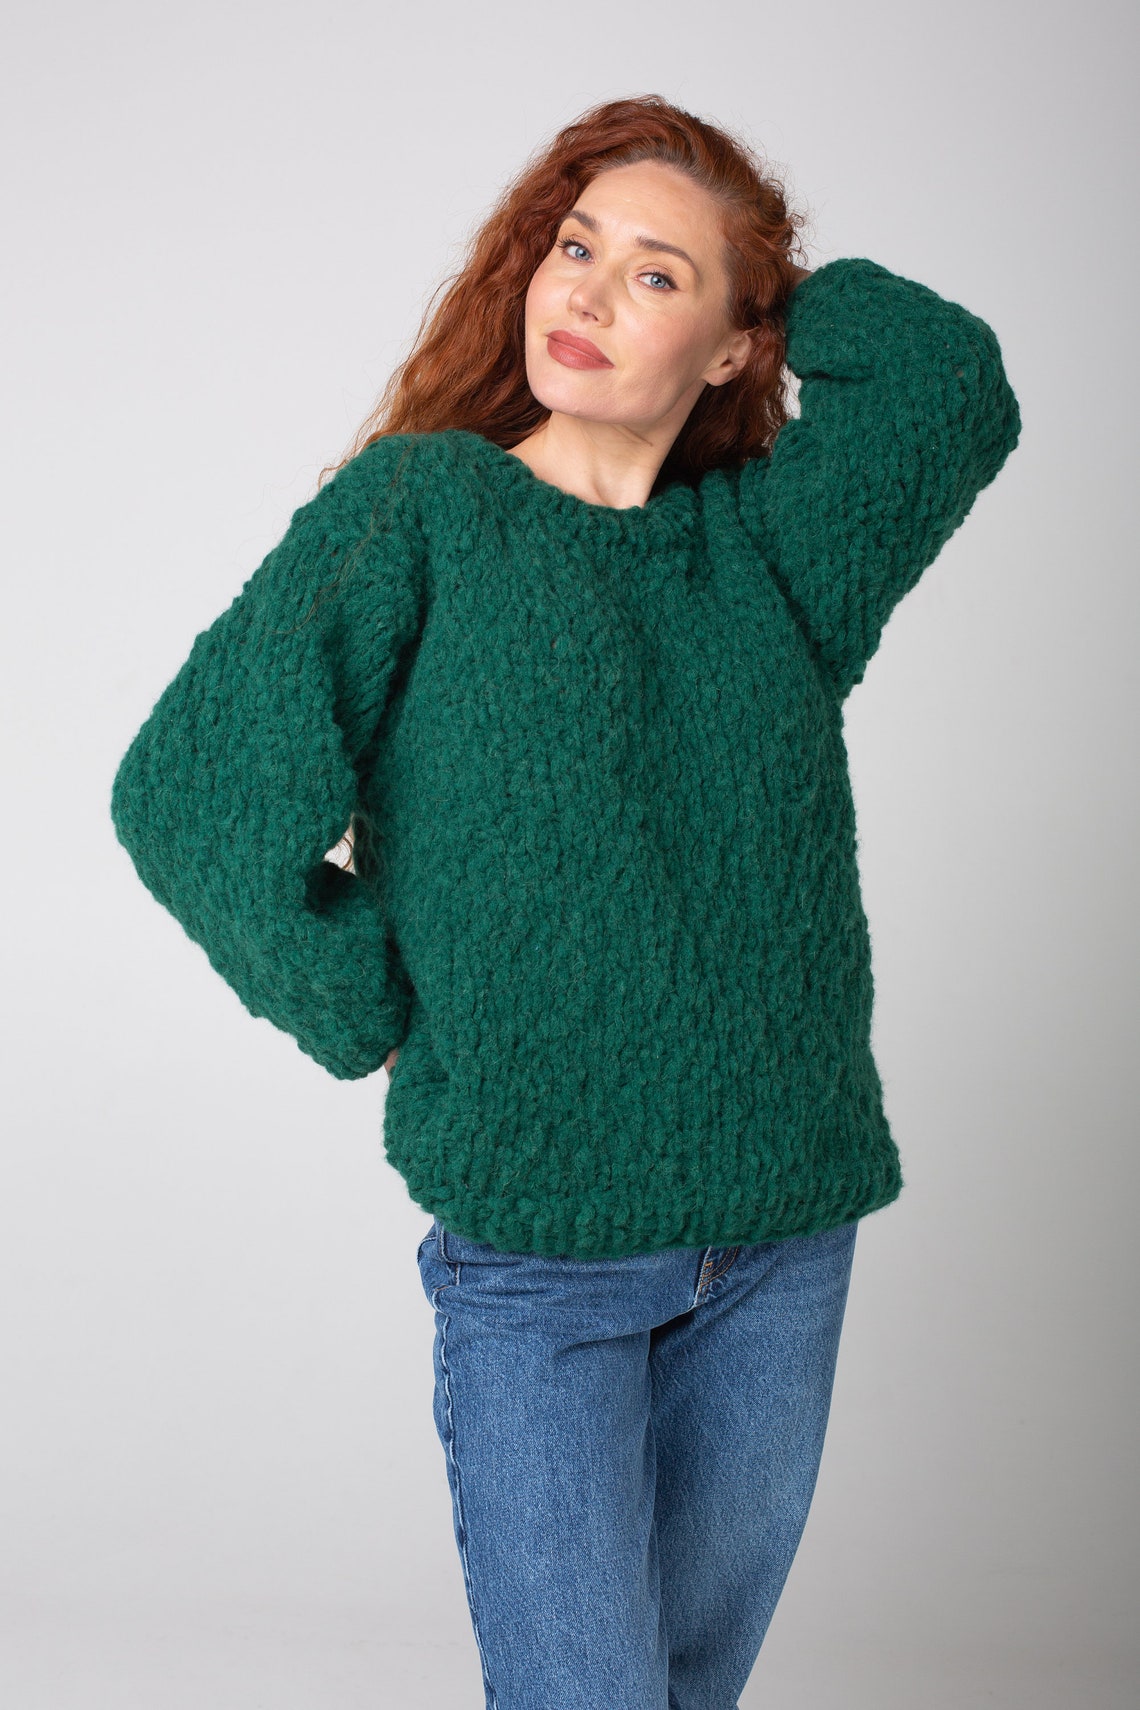 Green Oversize Sweater / Soft Alpaca Wool Hand knit Sweater / | Etsy